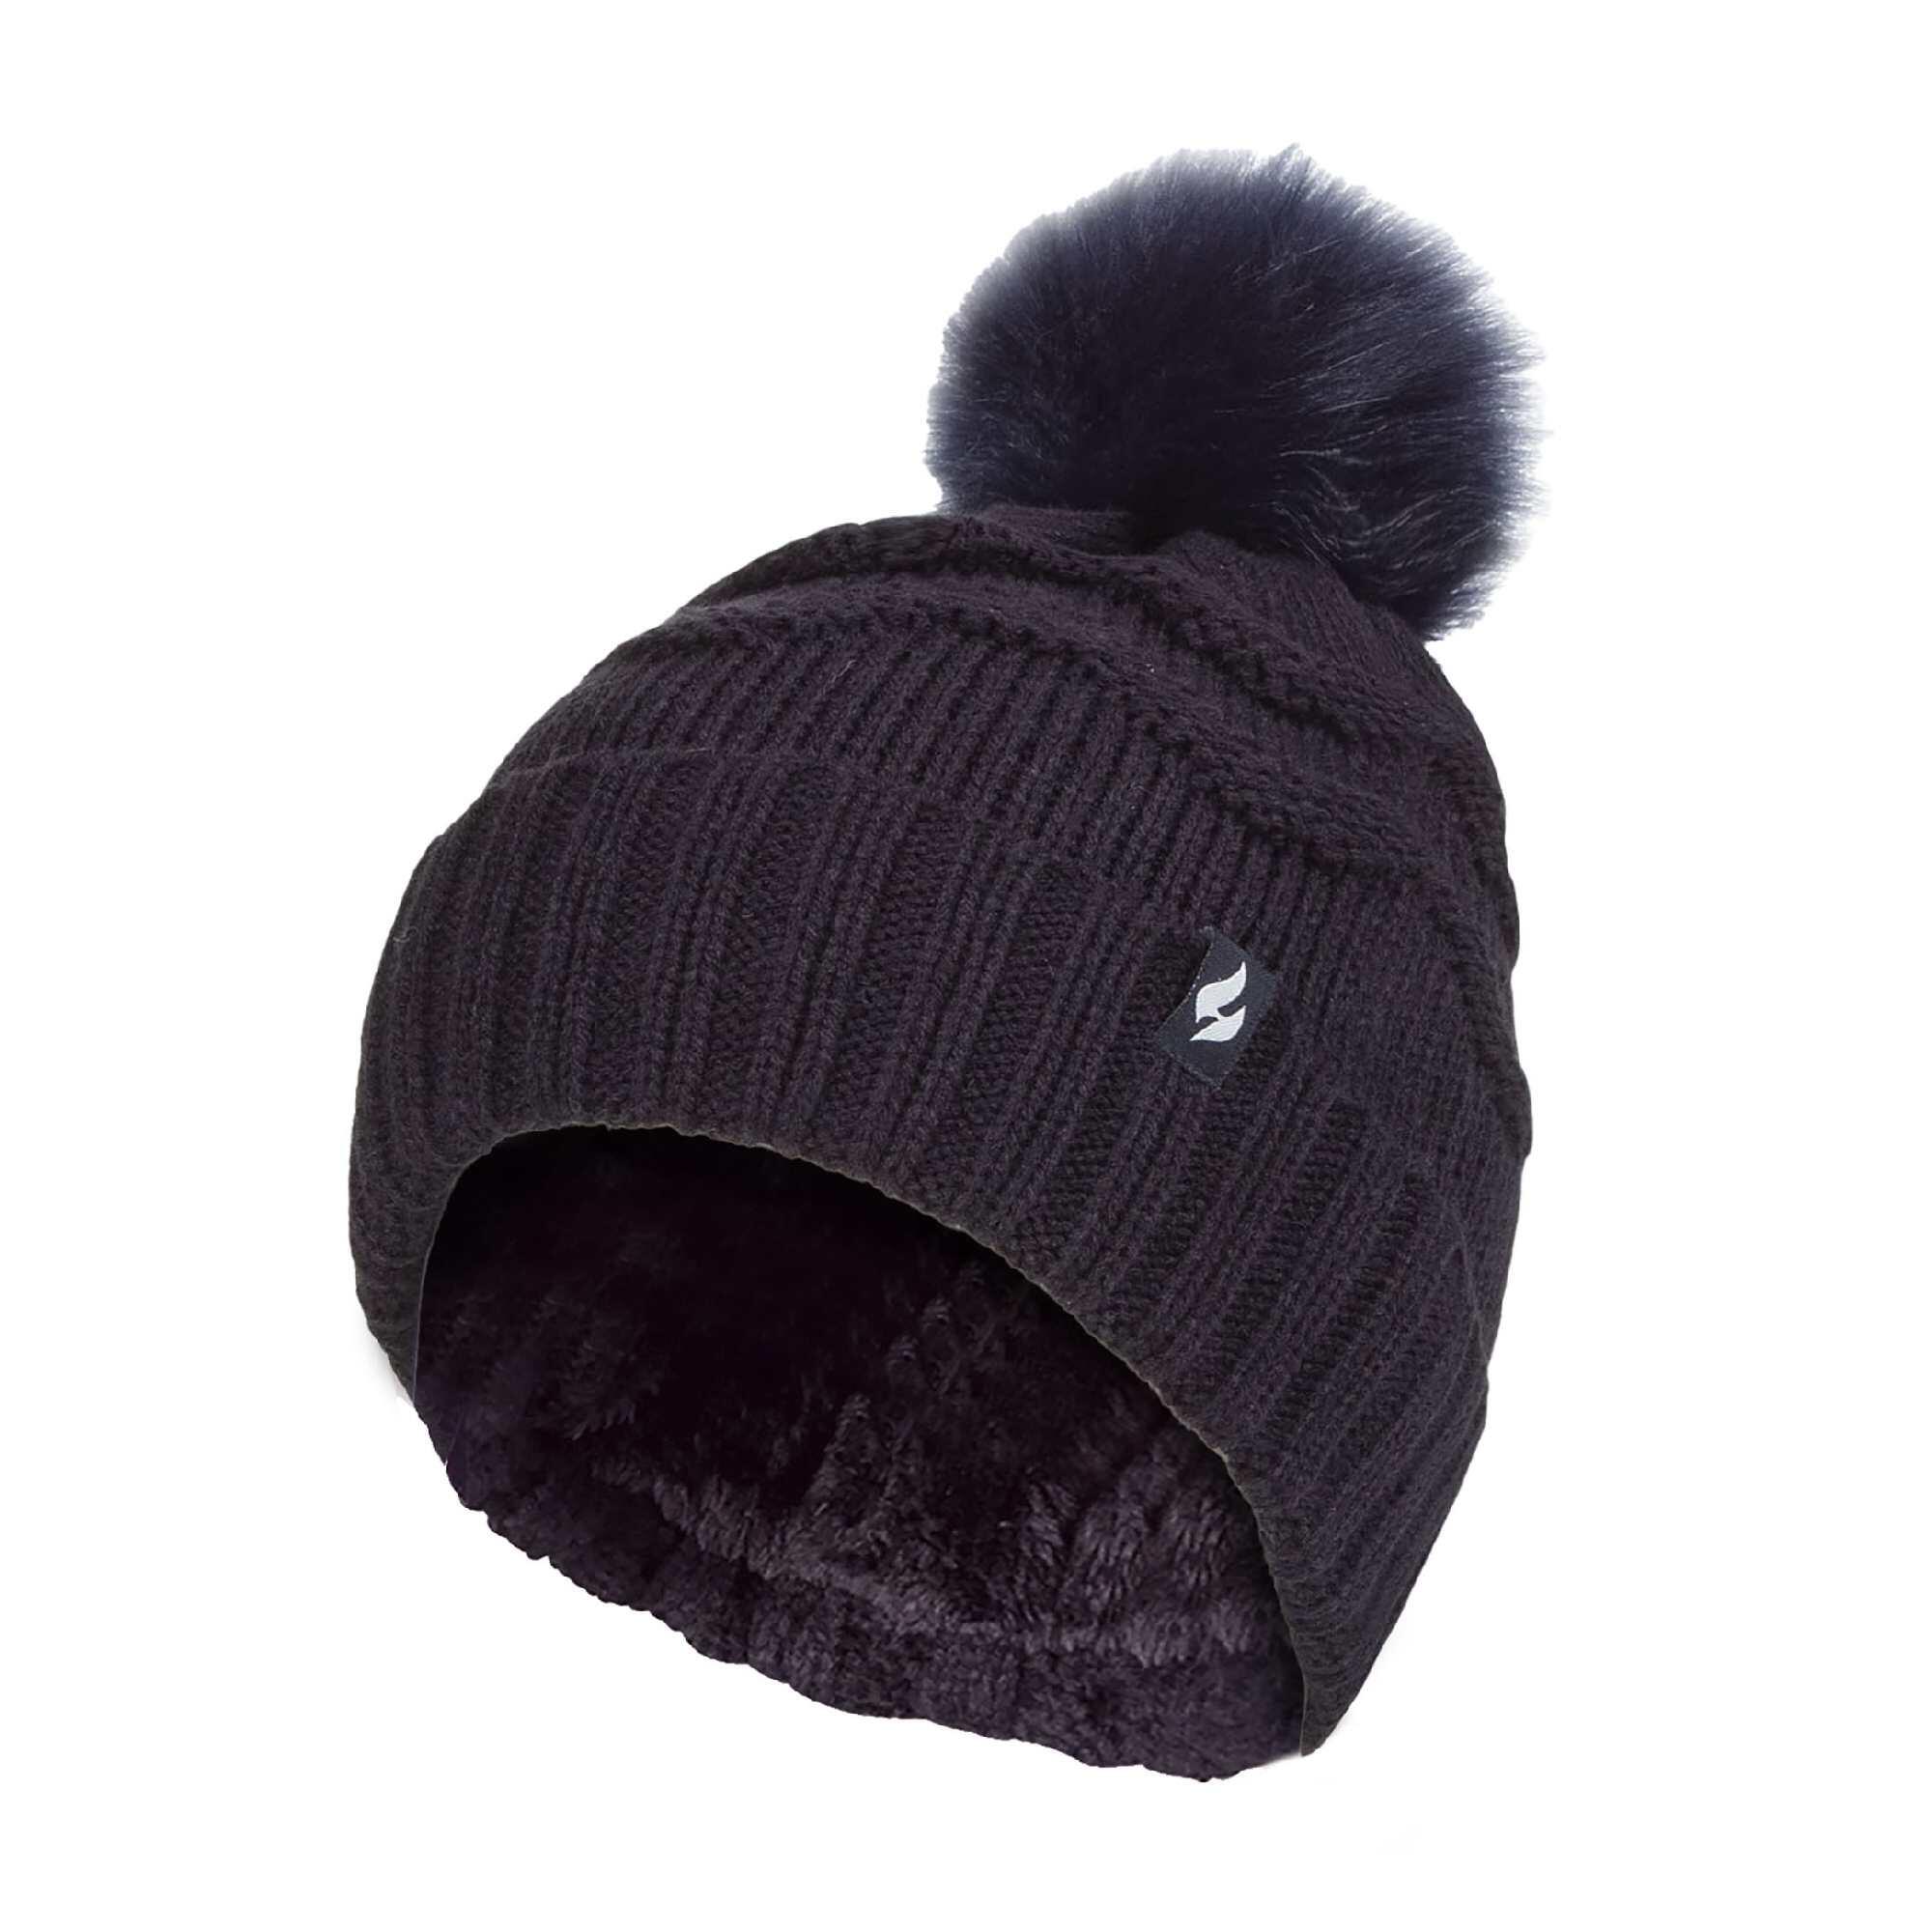 HEAT HOLDERS Ladies Winter Zigzag Patterned Fur Cuff Bobble Thermal Hat